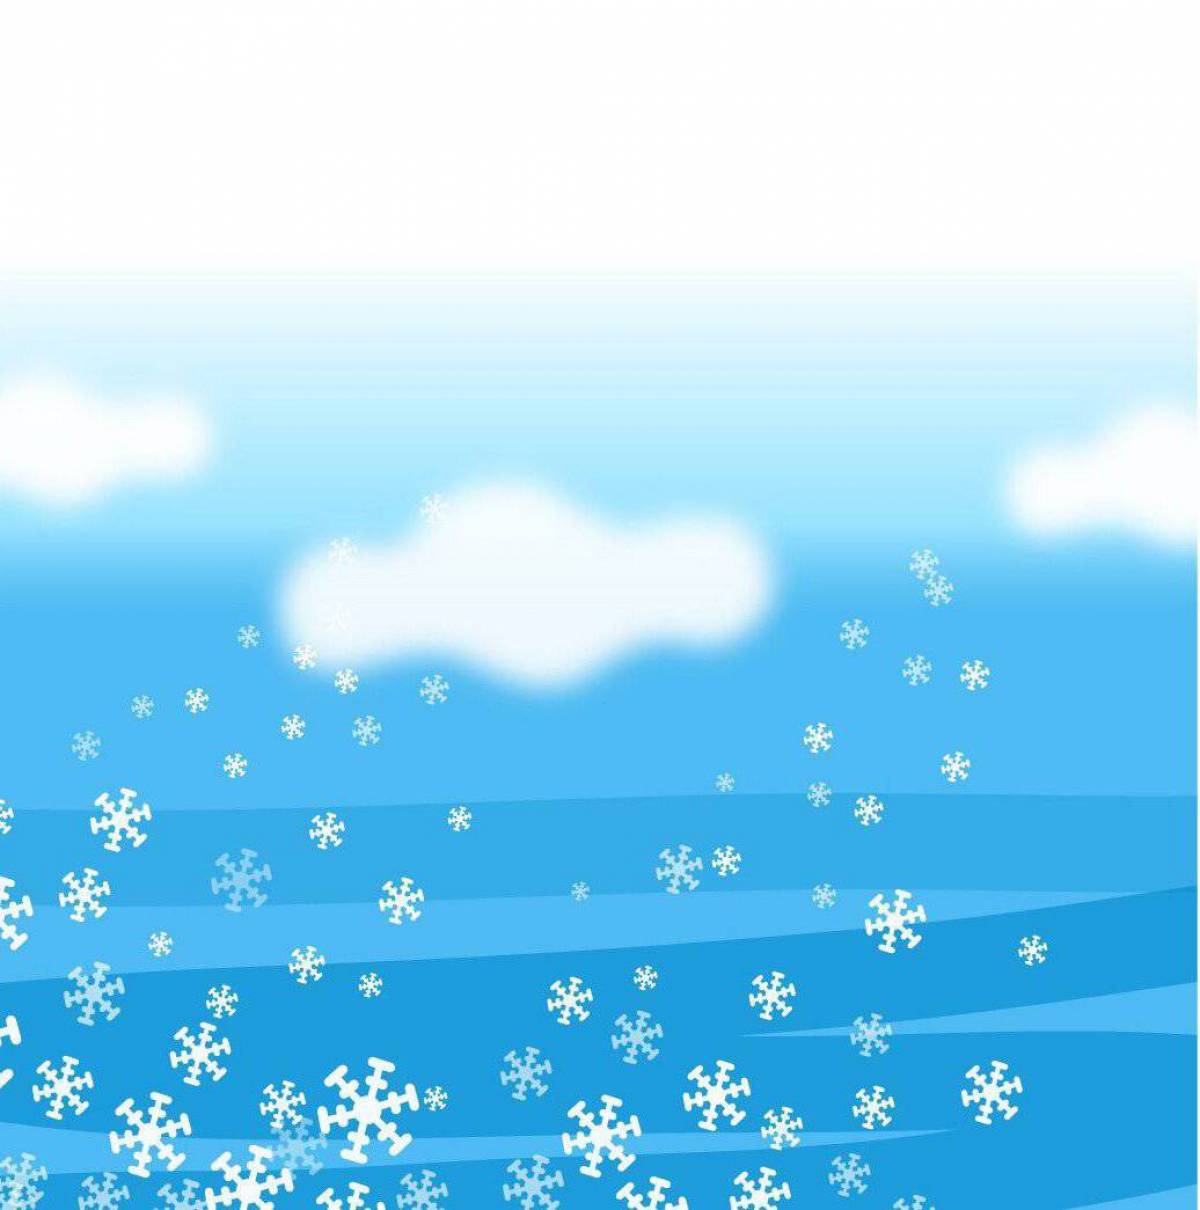 Сугроб рисунок. Ребенок в сугробе. Зимний фон. Снежинки падают. Снег рисунок.